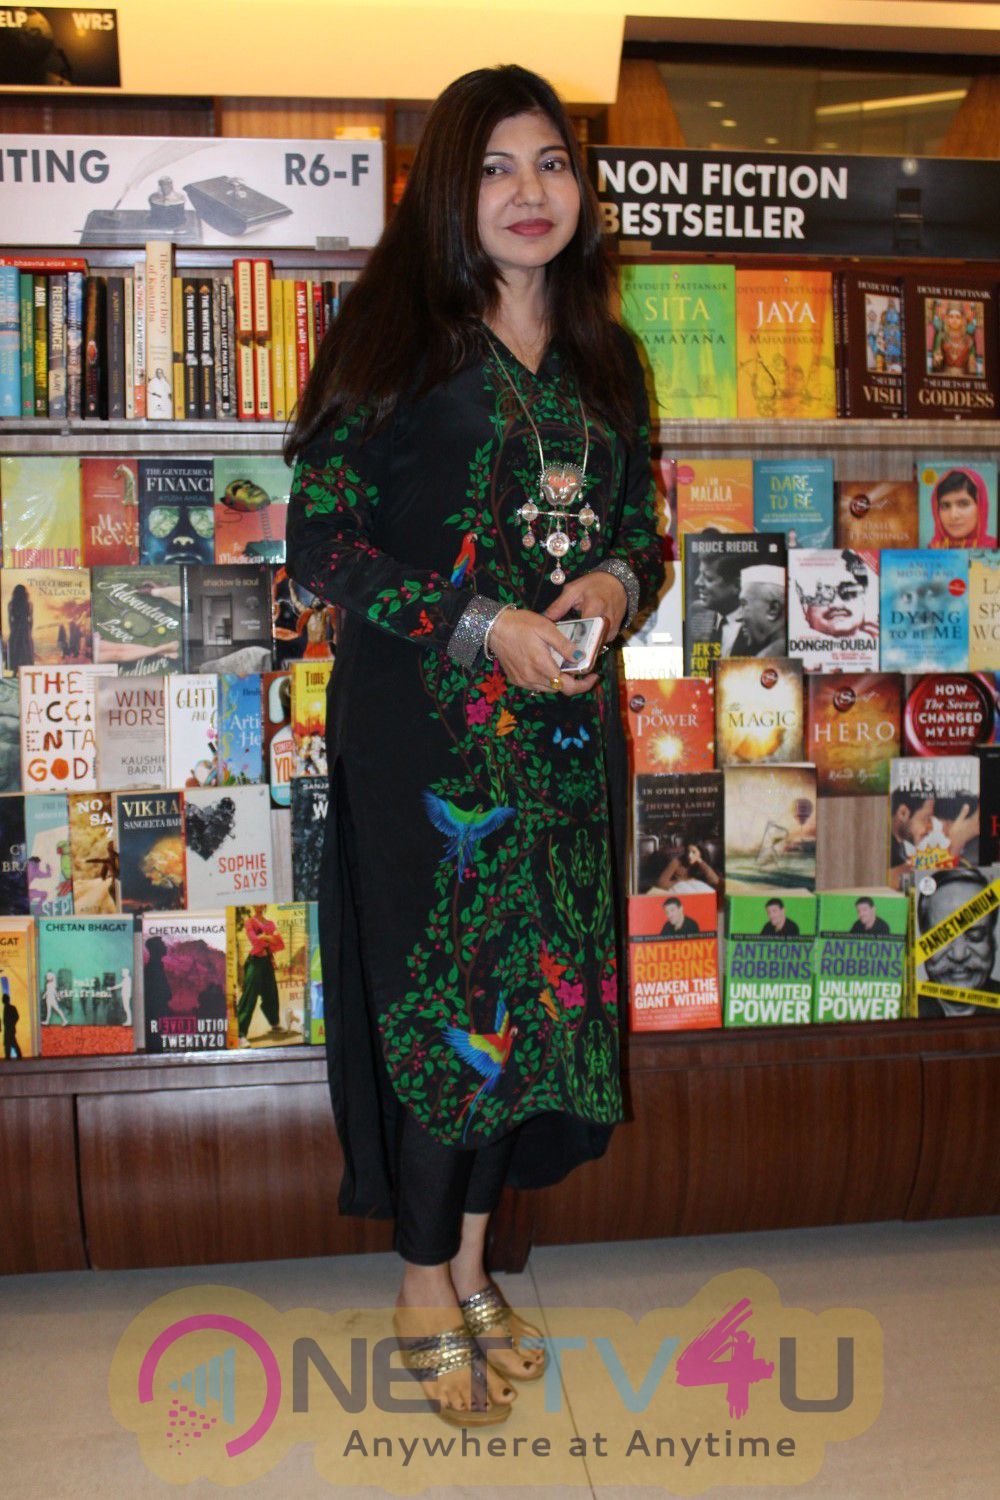 Death Is Not The Answer Book Launch At Raveena Tandon, Shabana Azmi & Suresh Oberoi Cute Stills Hindi Gallery